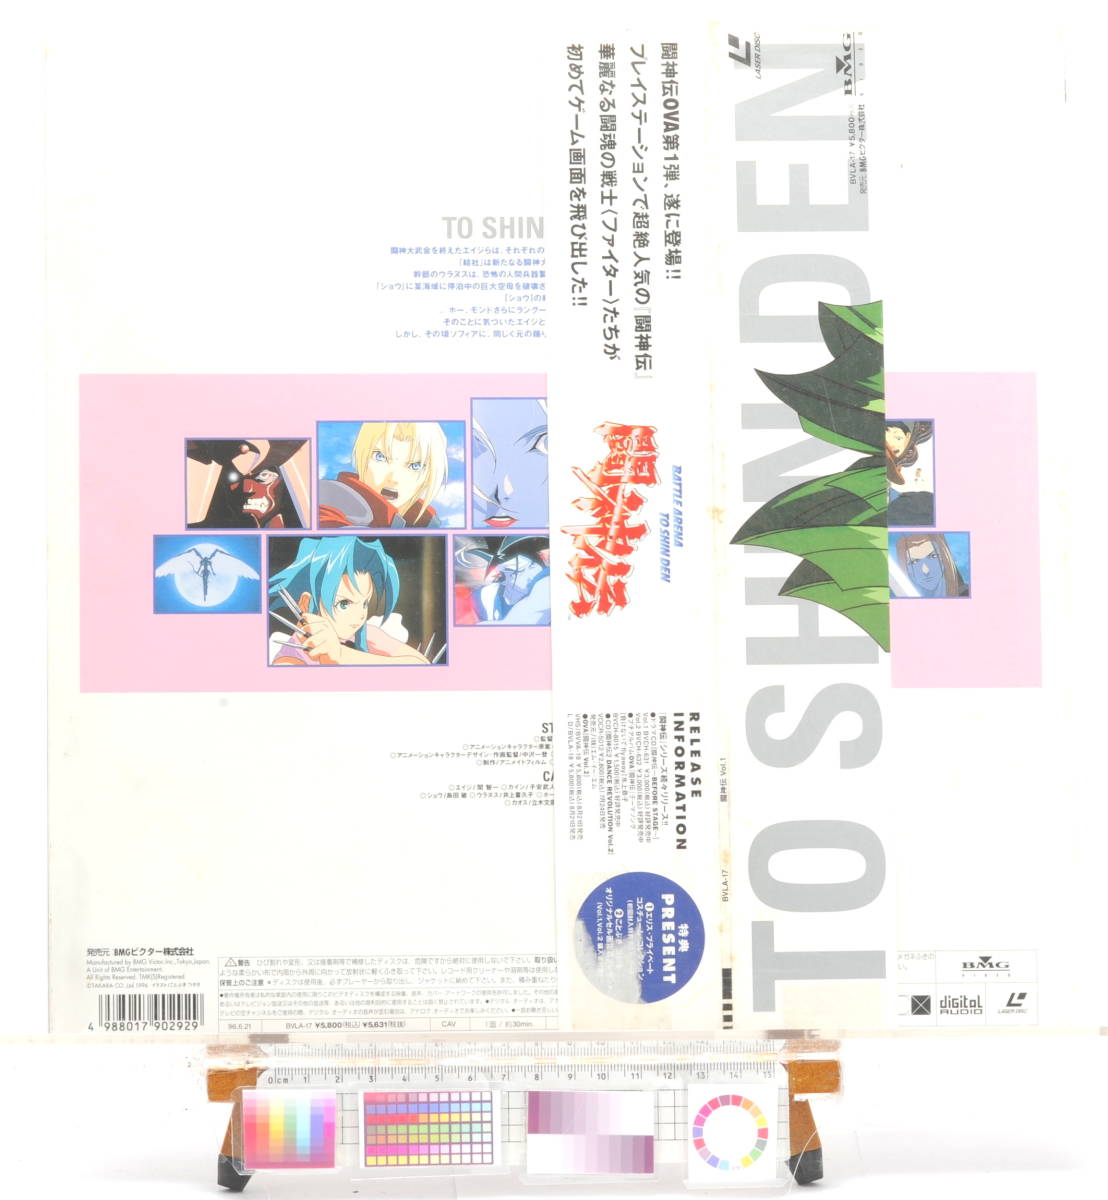 [Delivery Free]1990s- TOSHINDEN(Battle Arena)LaserDisc,Jacket [Bonus:LD SOFT(JPN)]闘神伝1/2 ことぶきつかさ ジャケット[tagLD]